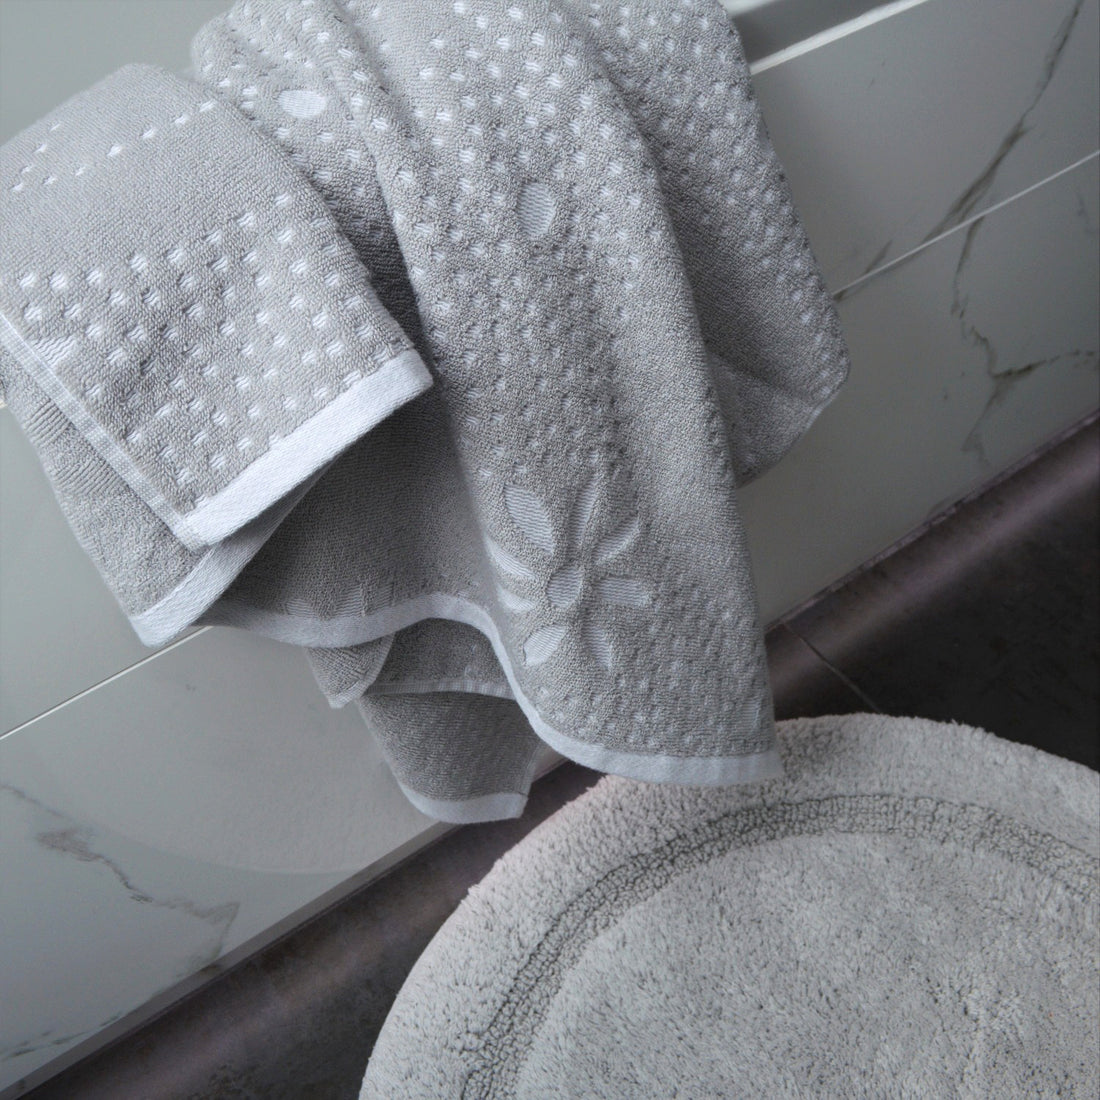 A Marrakesh Bath Towel hung over the edge of a bathtub